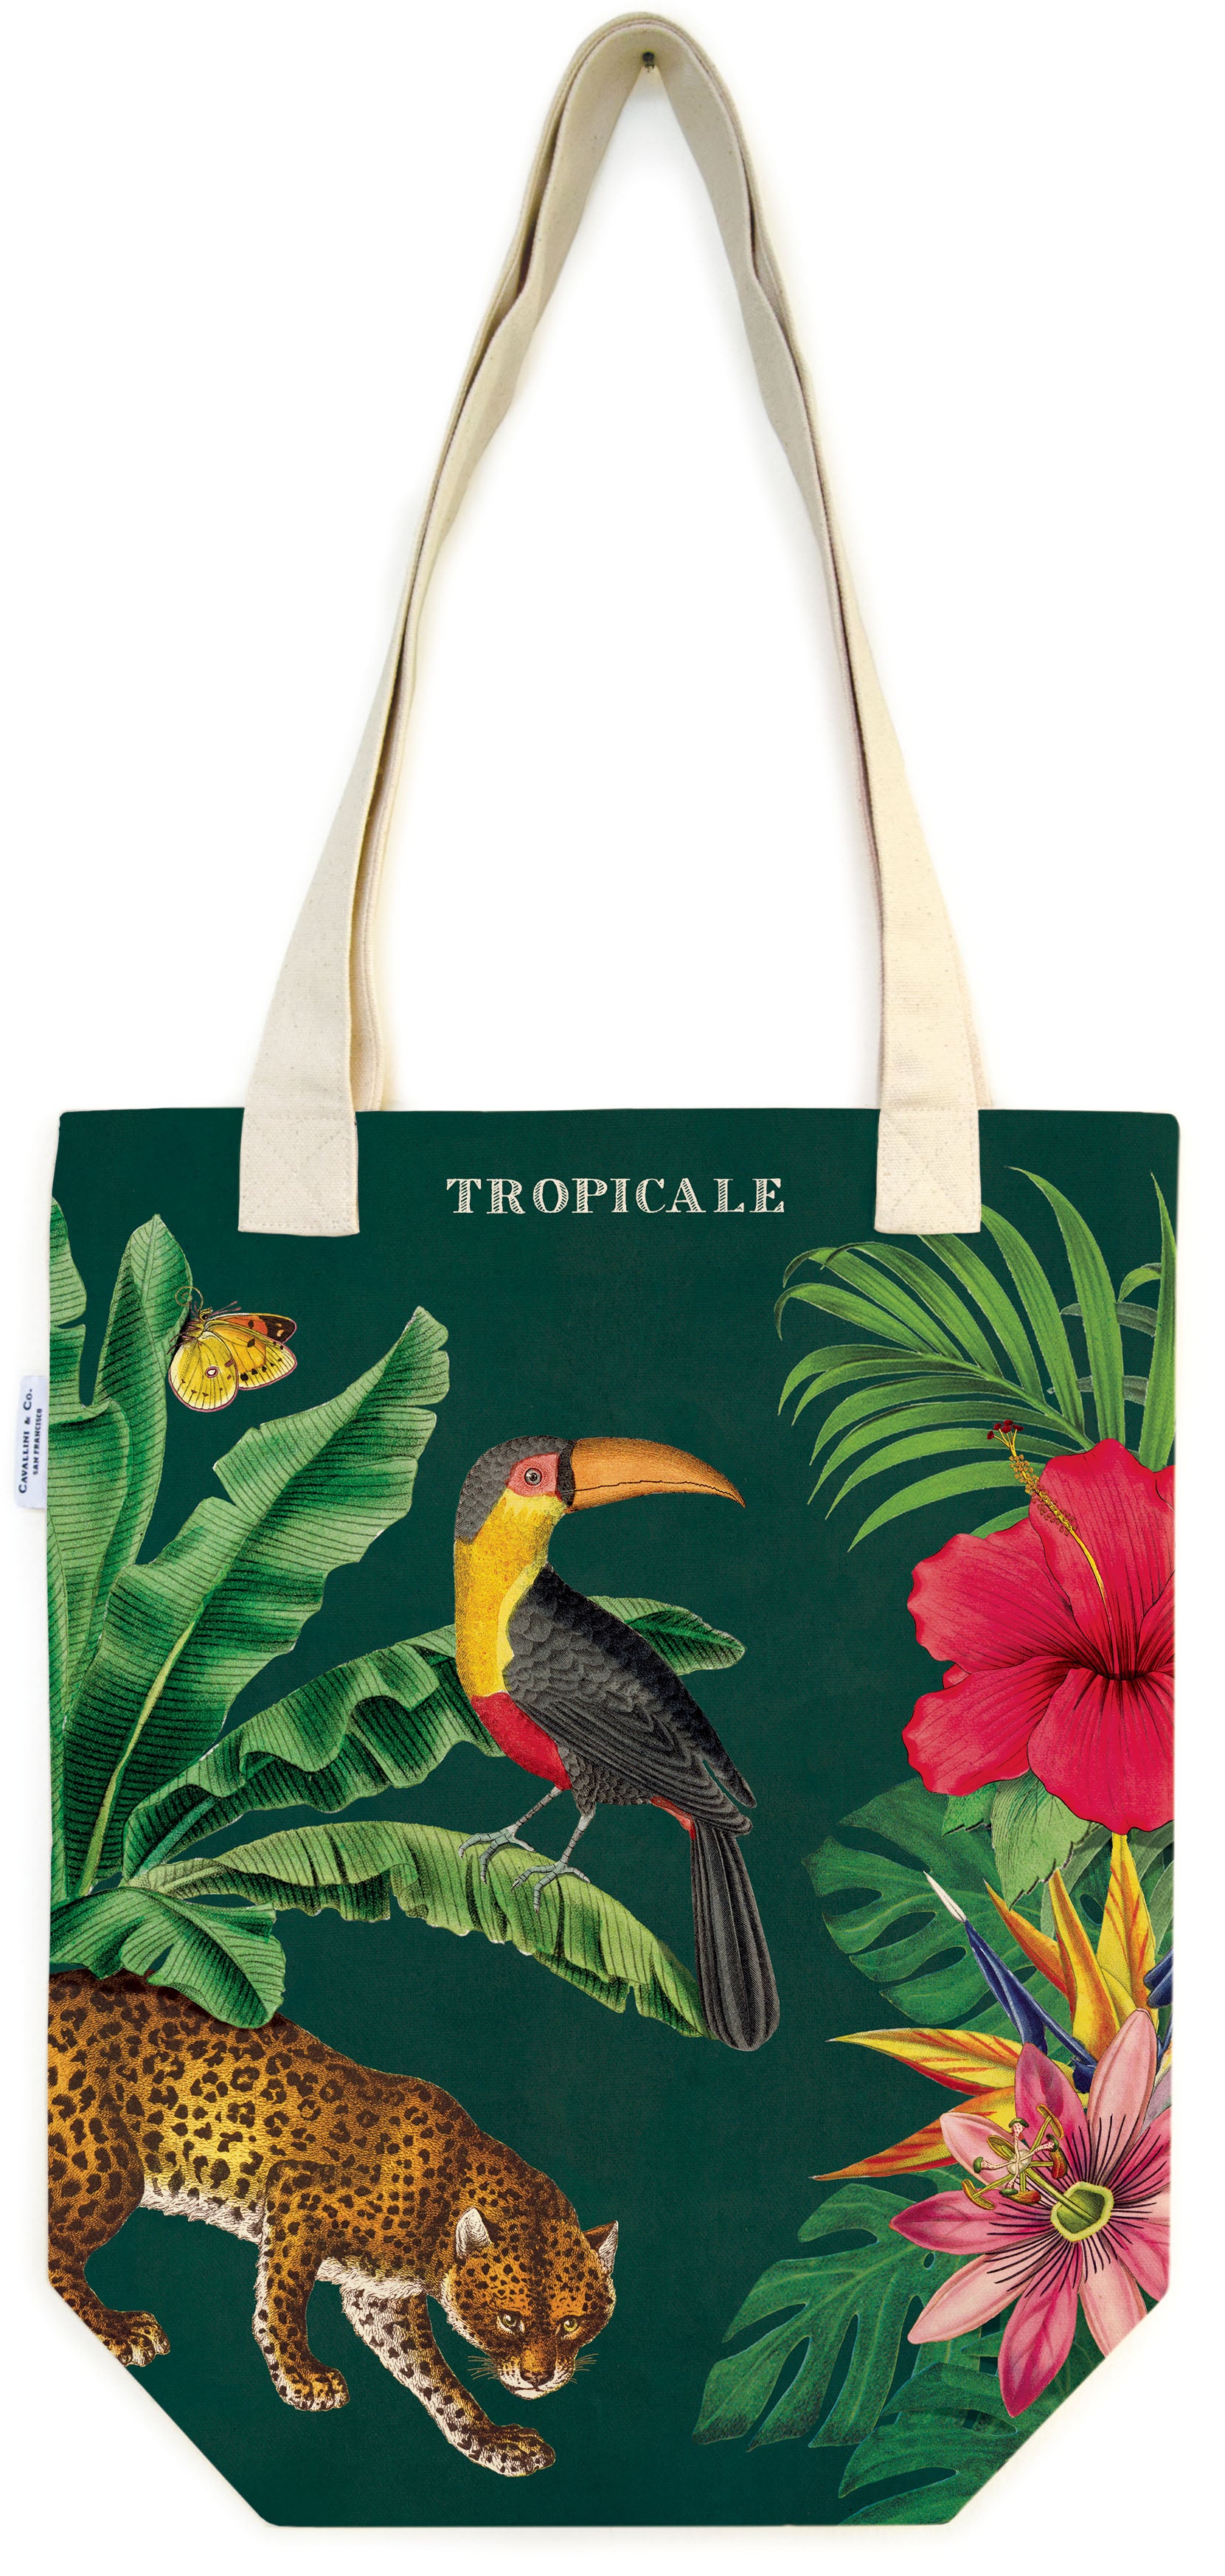 Tropical Tote Bag | Cavallini - Oscar & Libby's